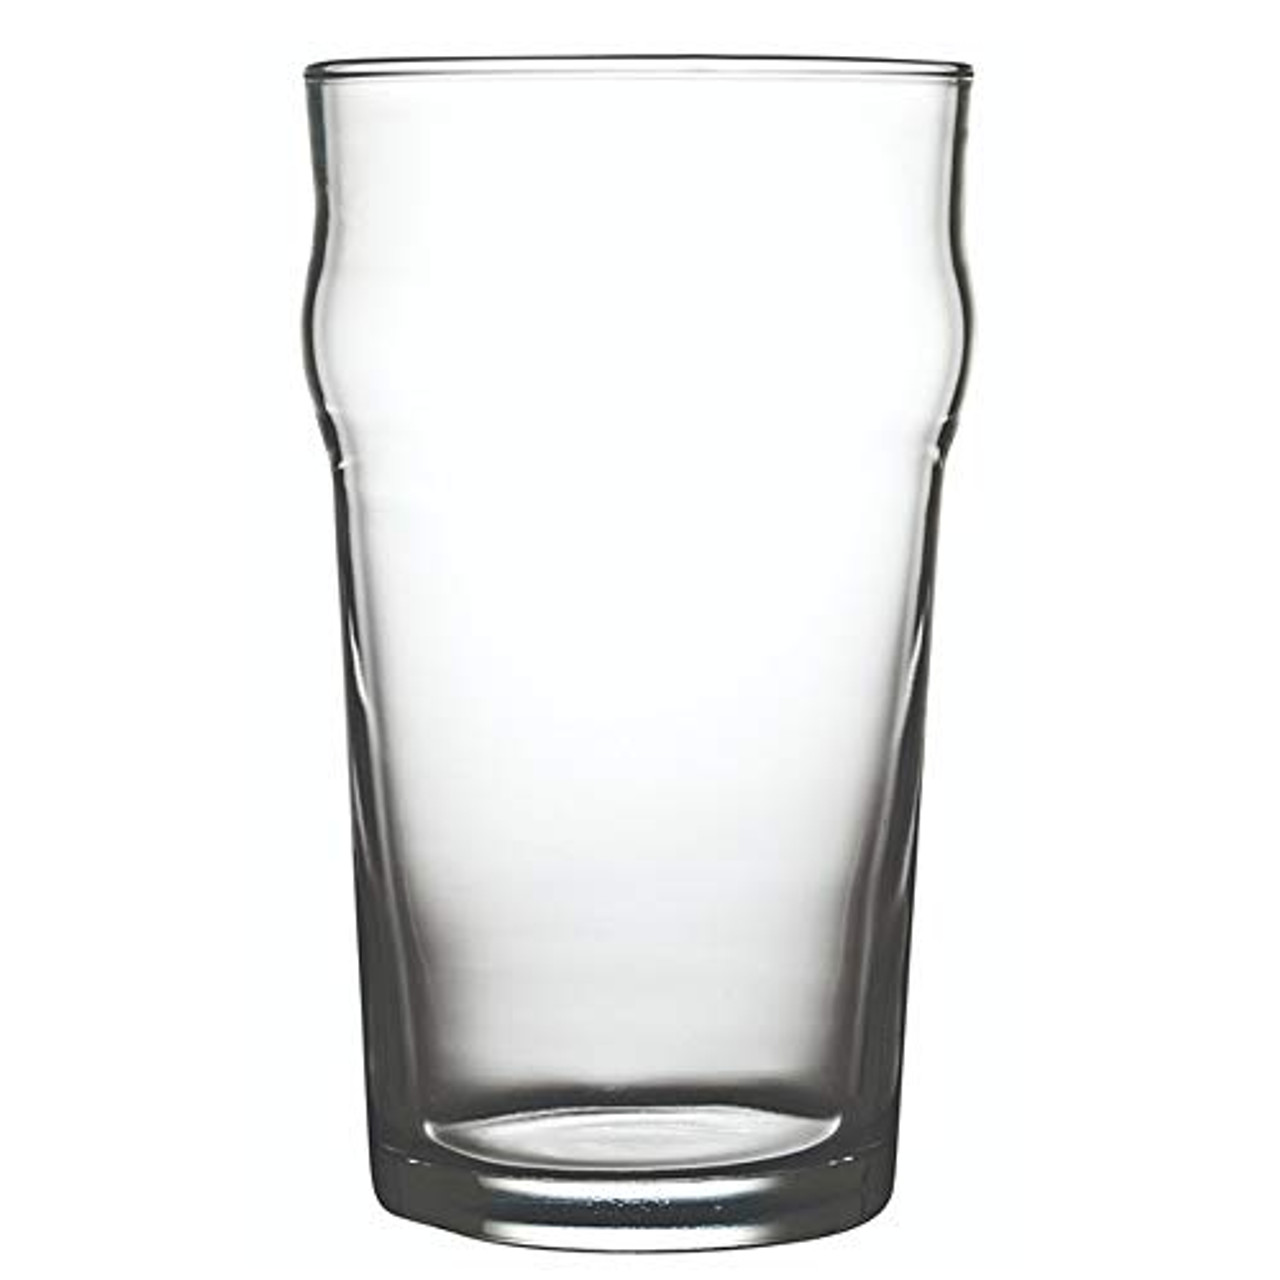 20 oz Imperial Nonic Pint Glass - 3 1/2 x 3 1/2 x 6 - 6 count box -  Restaurantware